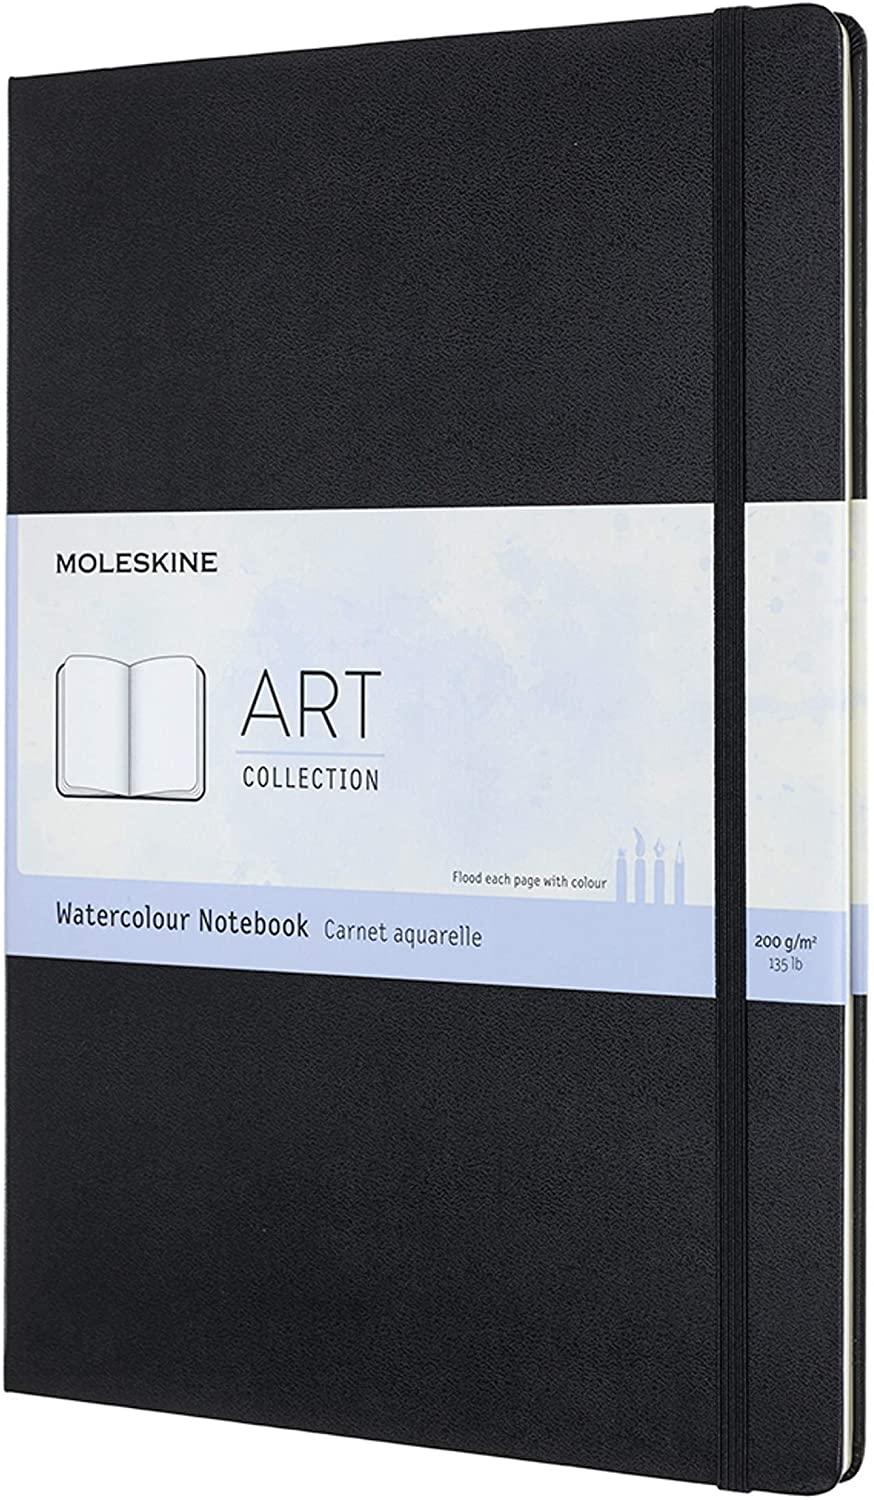 دفتر رسم Moleskine - Art Collection Watercolor Notebook - 60 صفحة / أسود - cG9zdDo1NzUyOA==